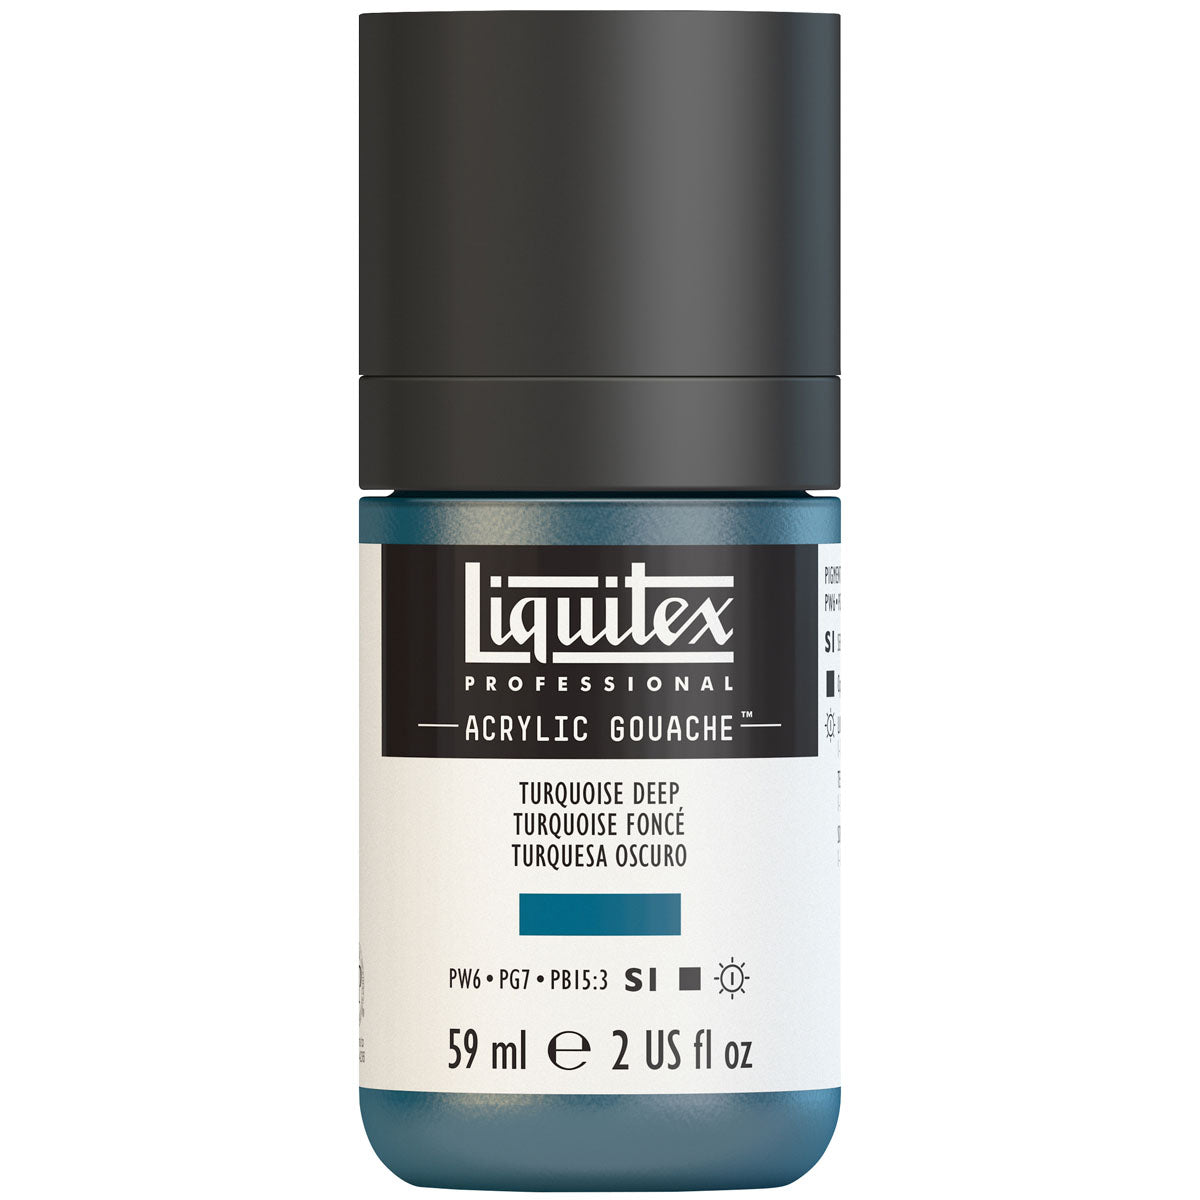 Liquitex - Acrylic Gouache 59ml S1 - Turquoise Deep